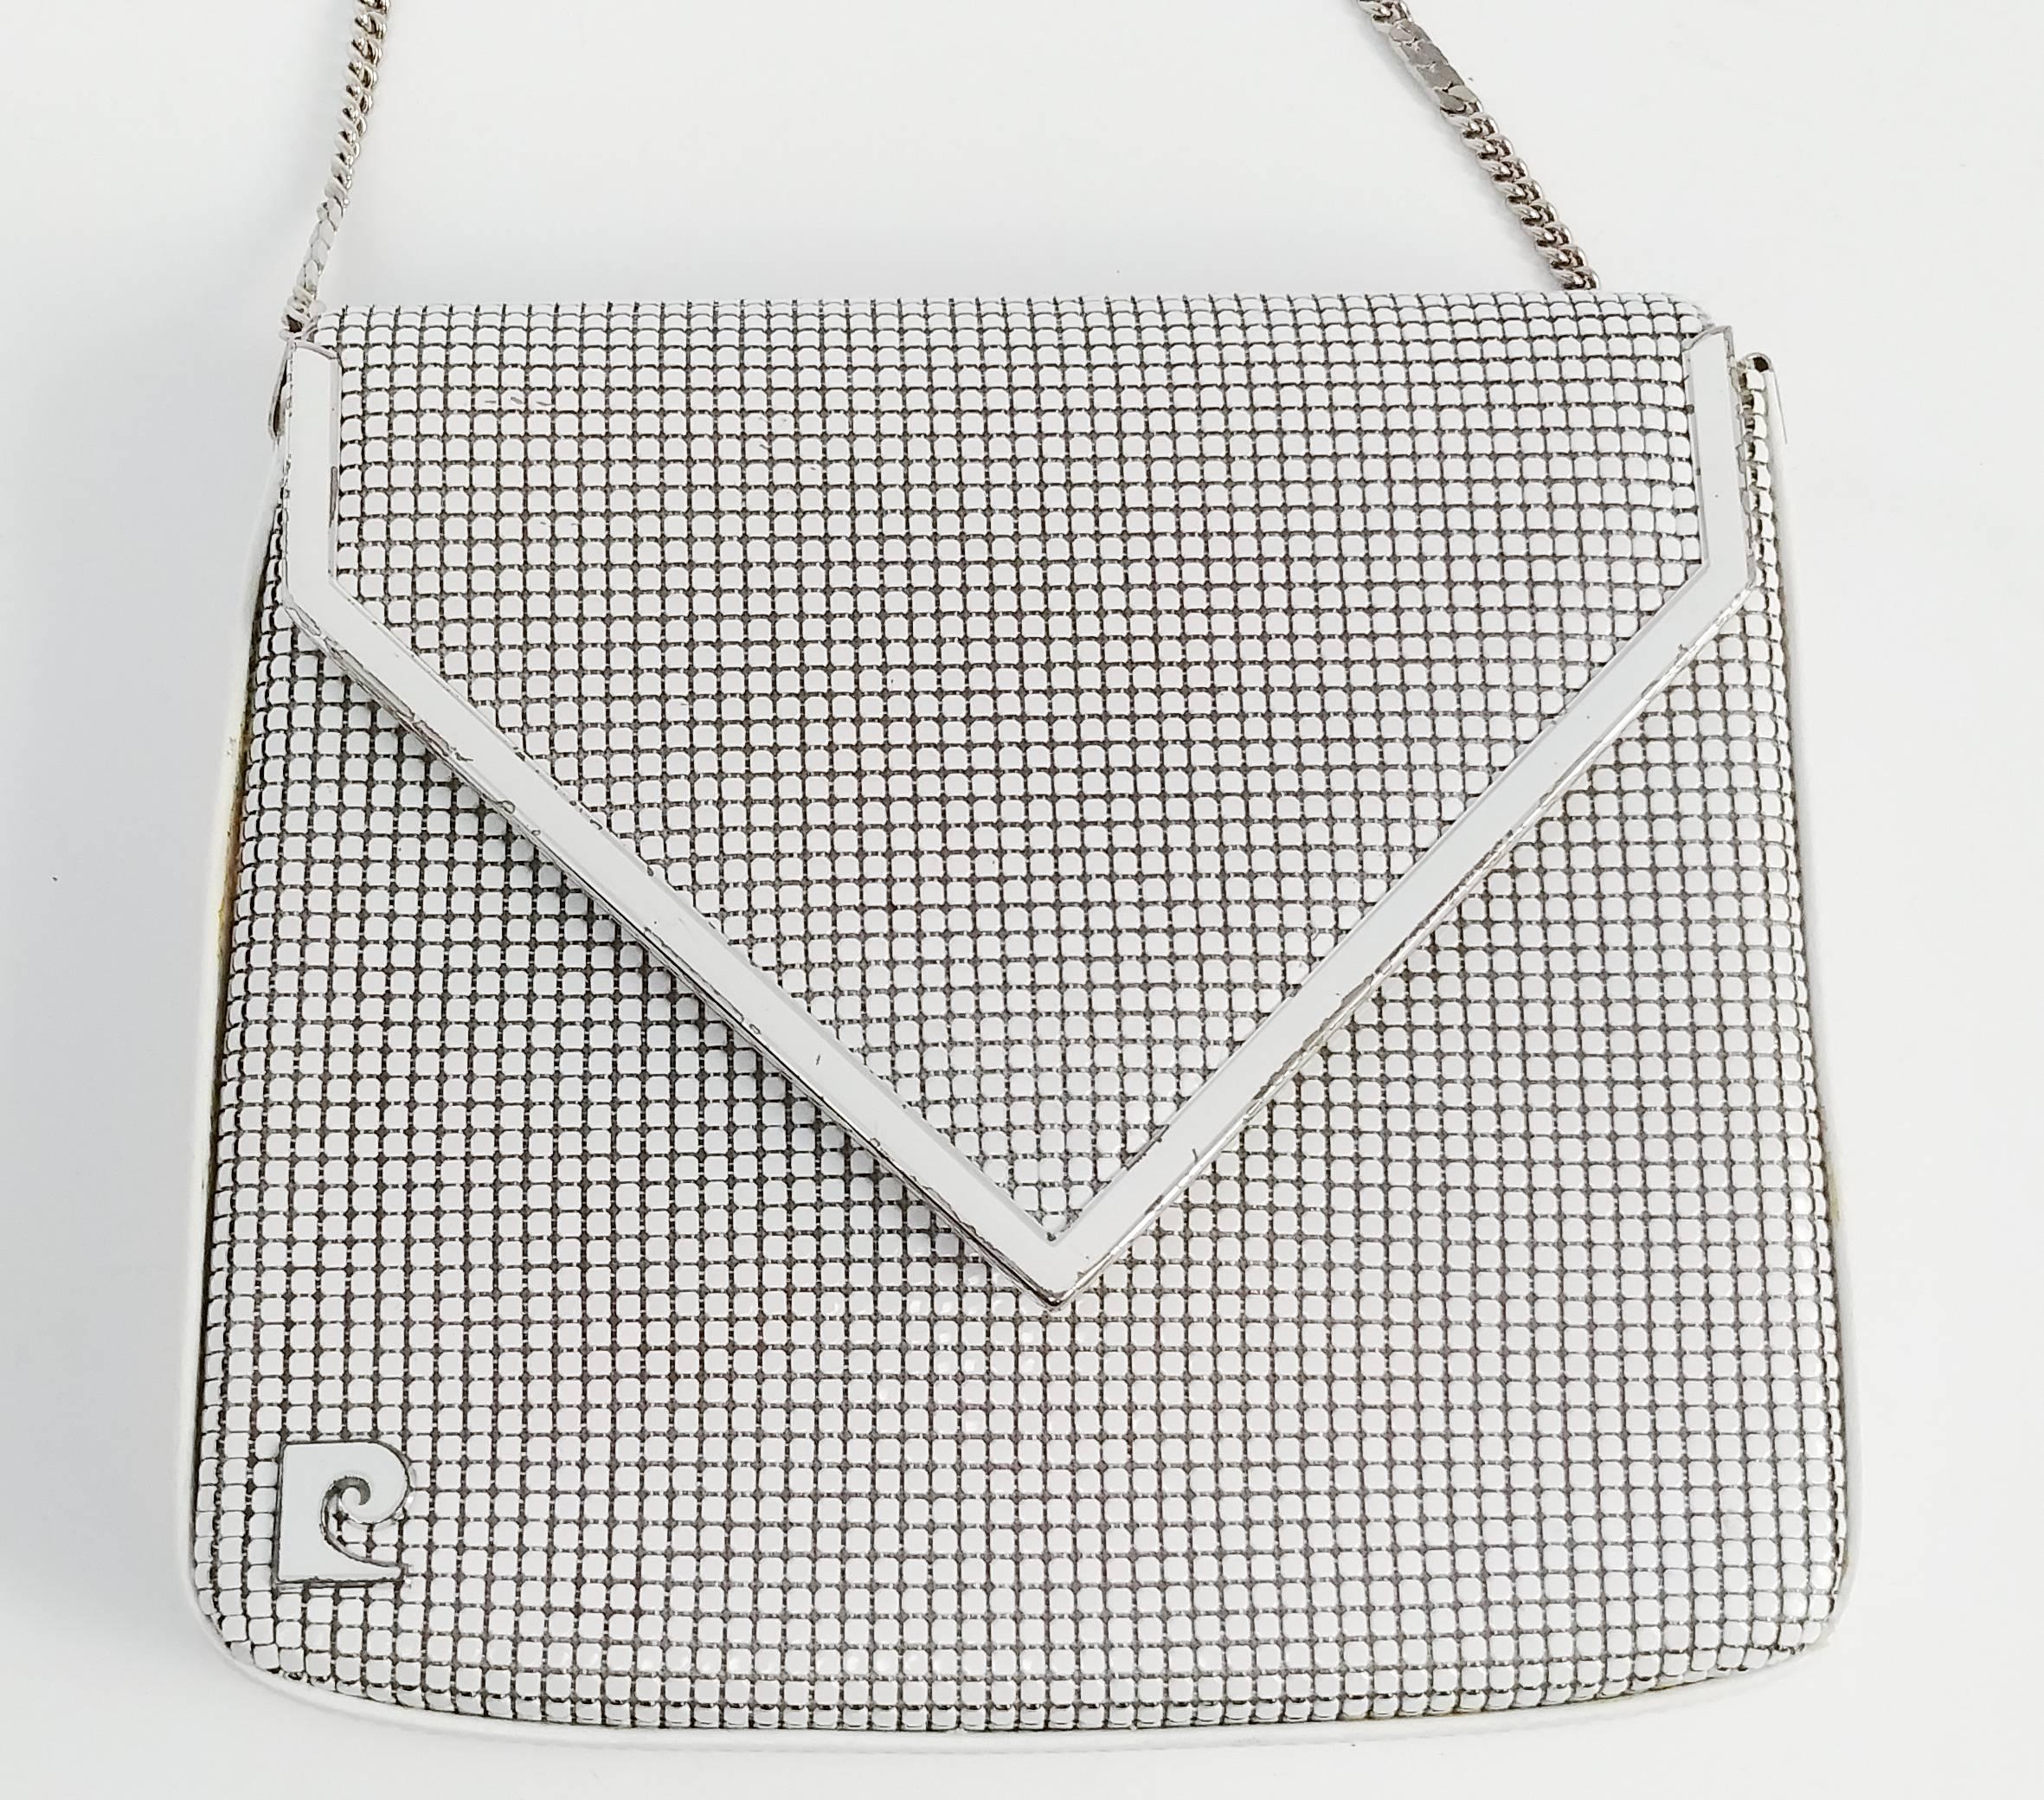 1970s Pierre Cardin White Metal Mesh Purse. Long strap can tuck into purse.